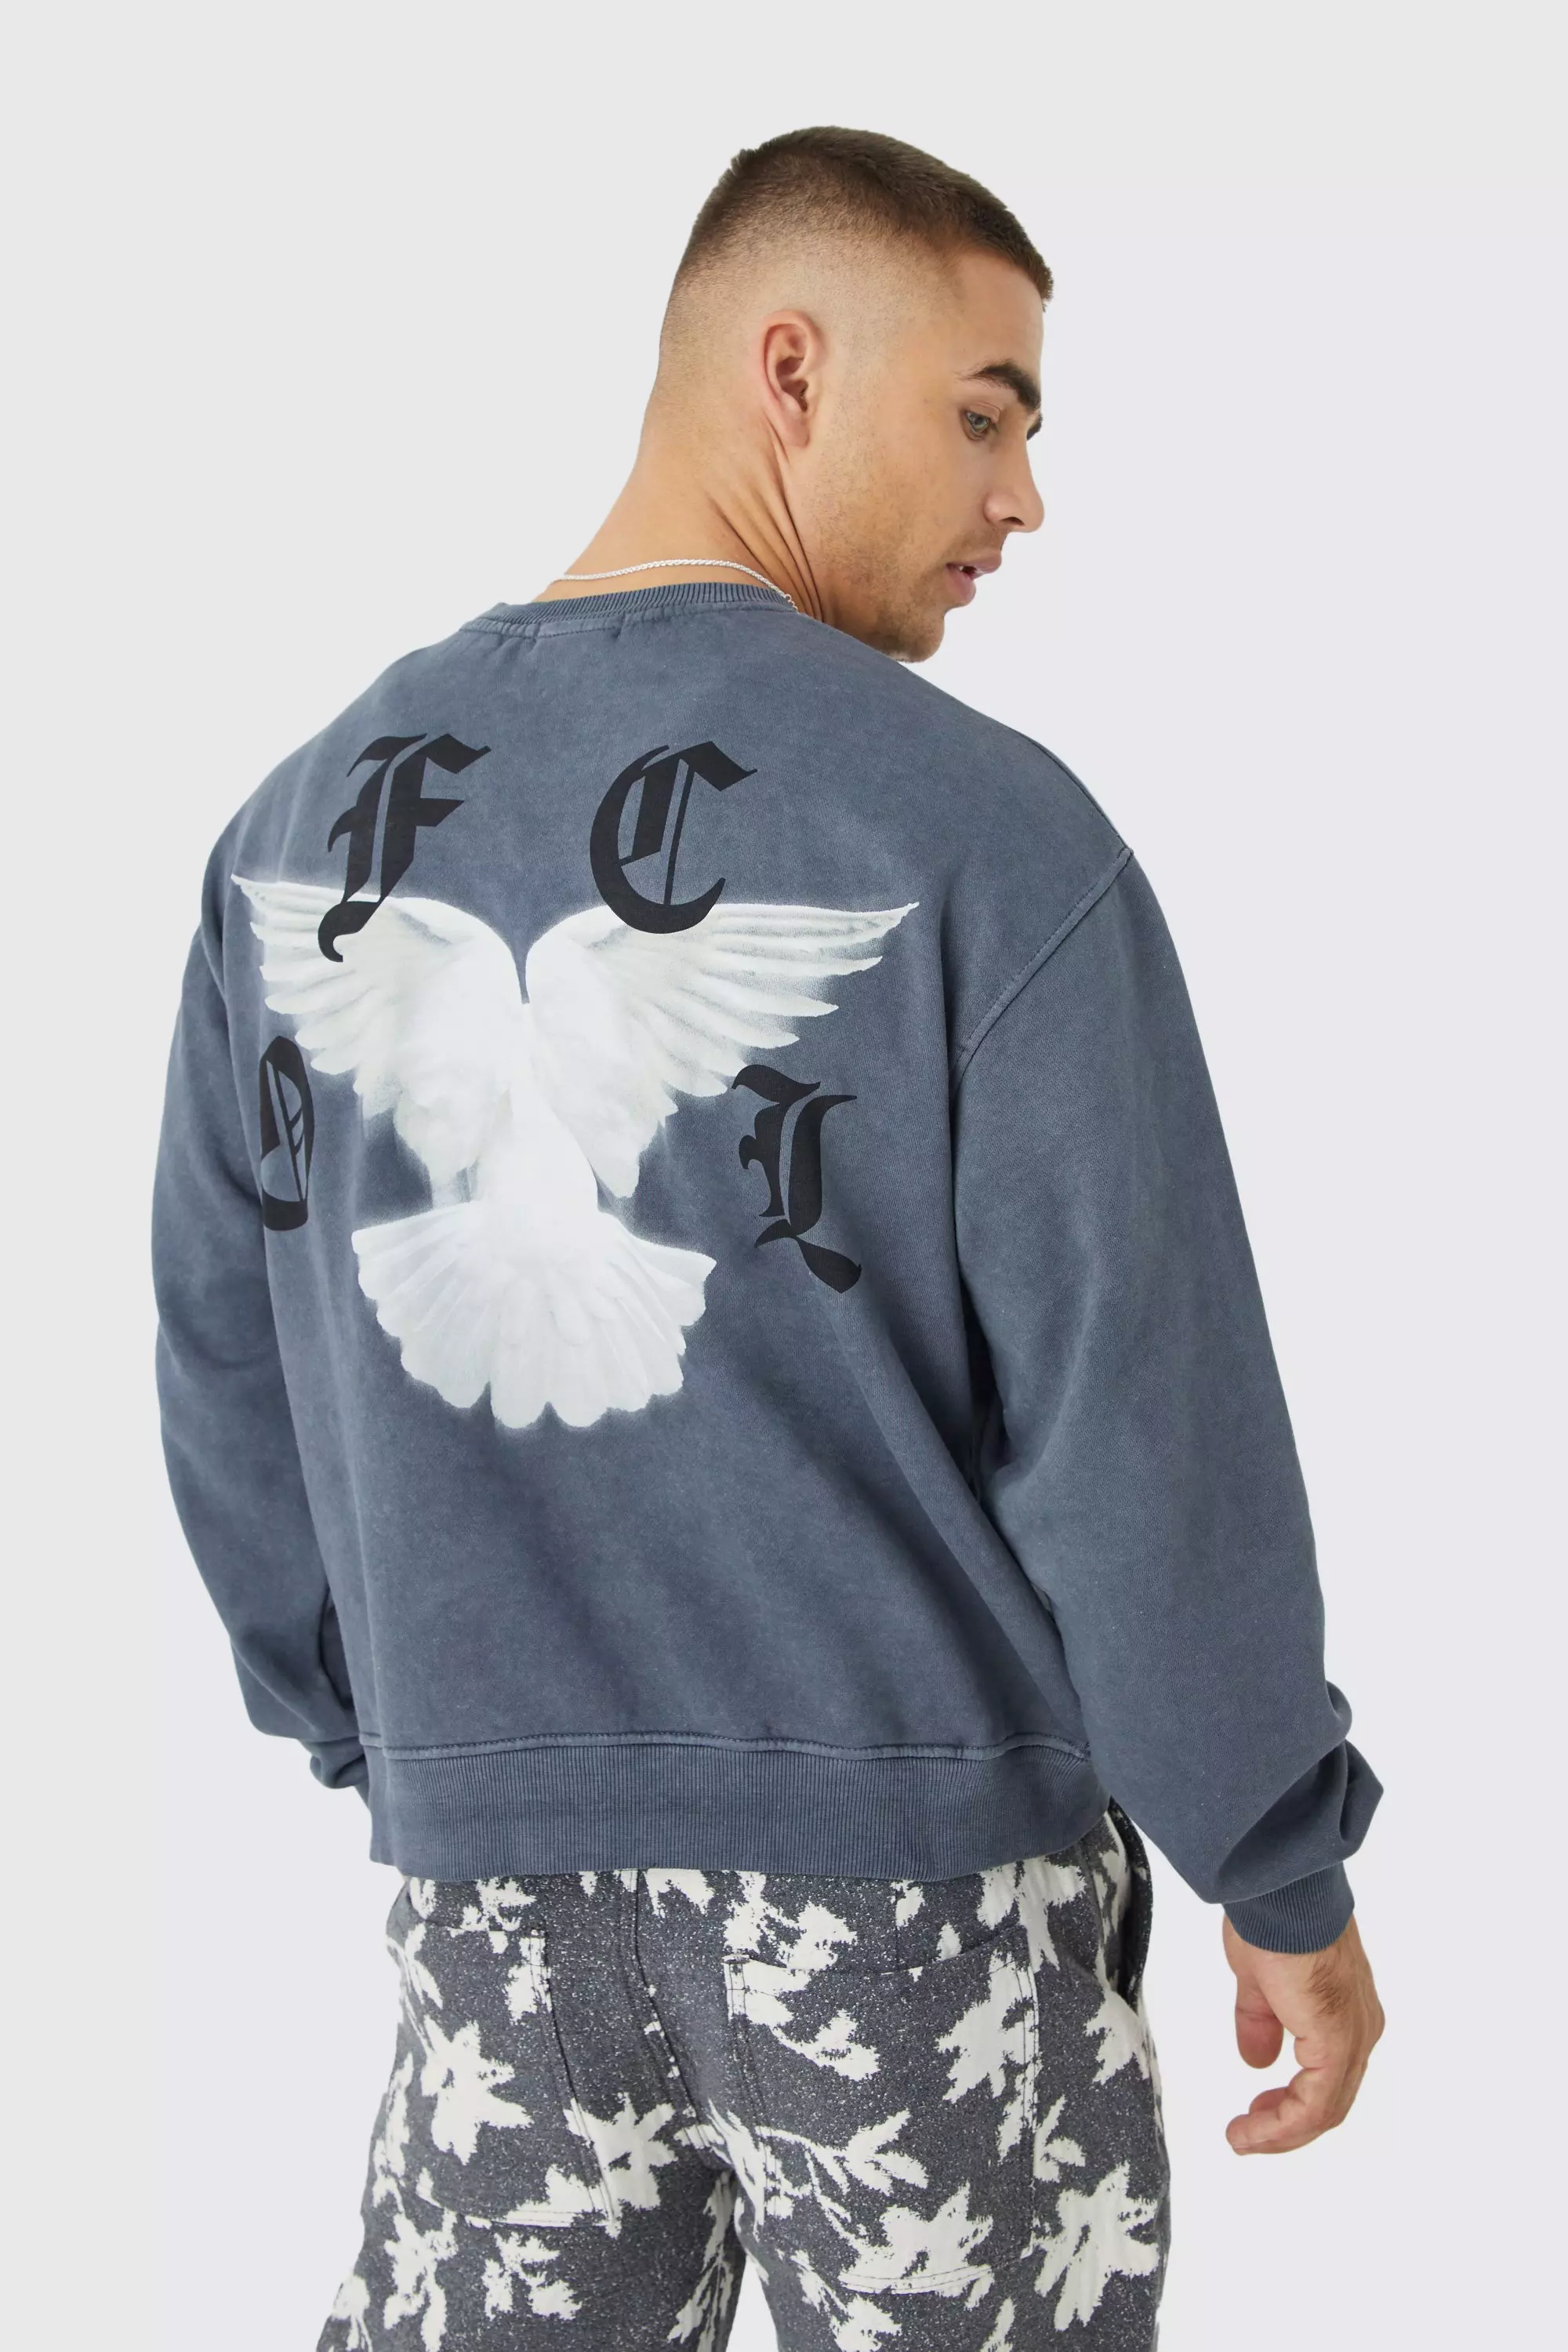 Charcoal Grey Oversized Boxy Acid Washed Graphic Sweatshirt